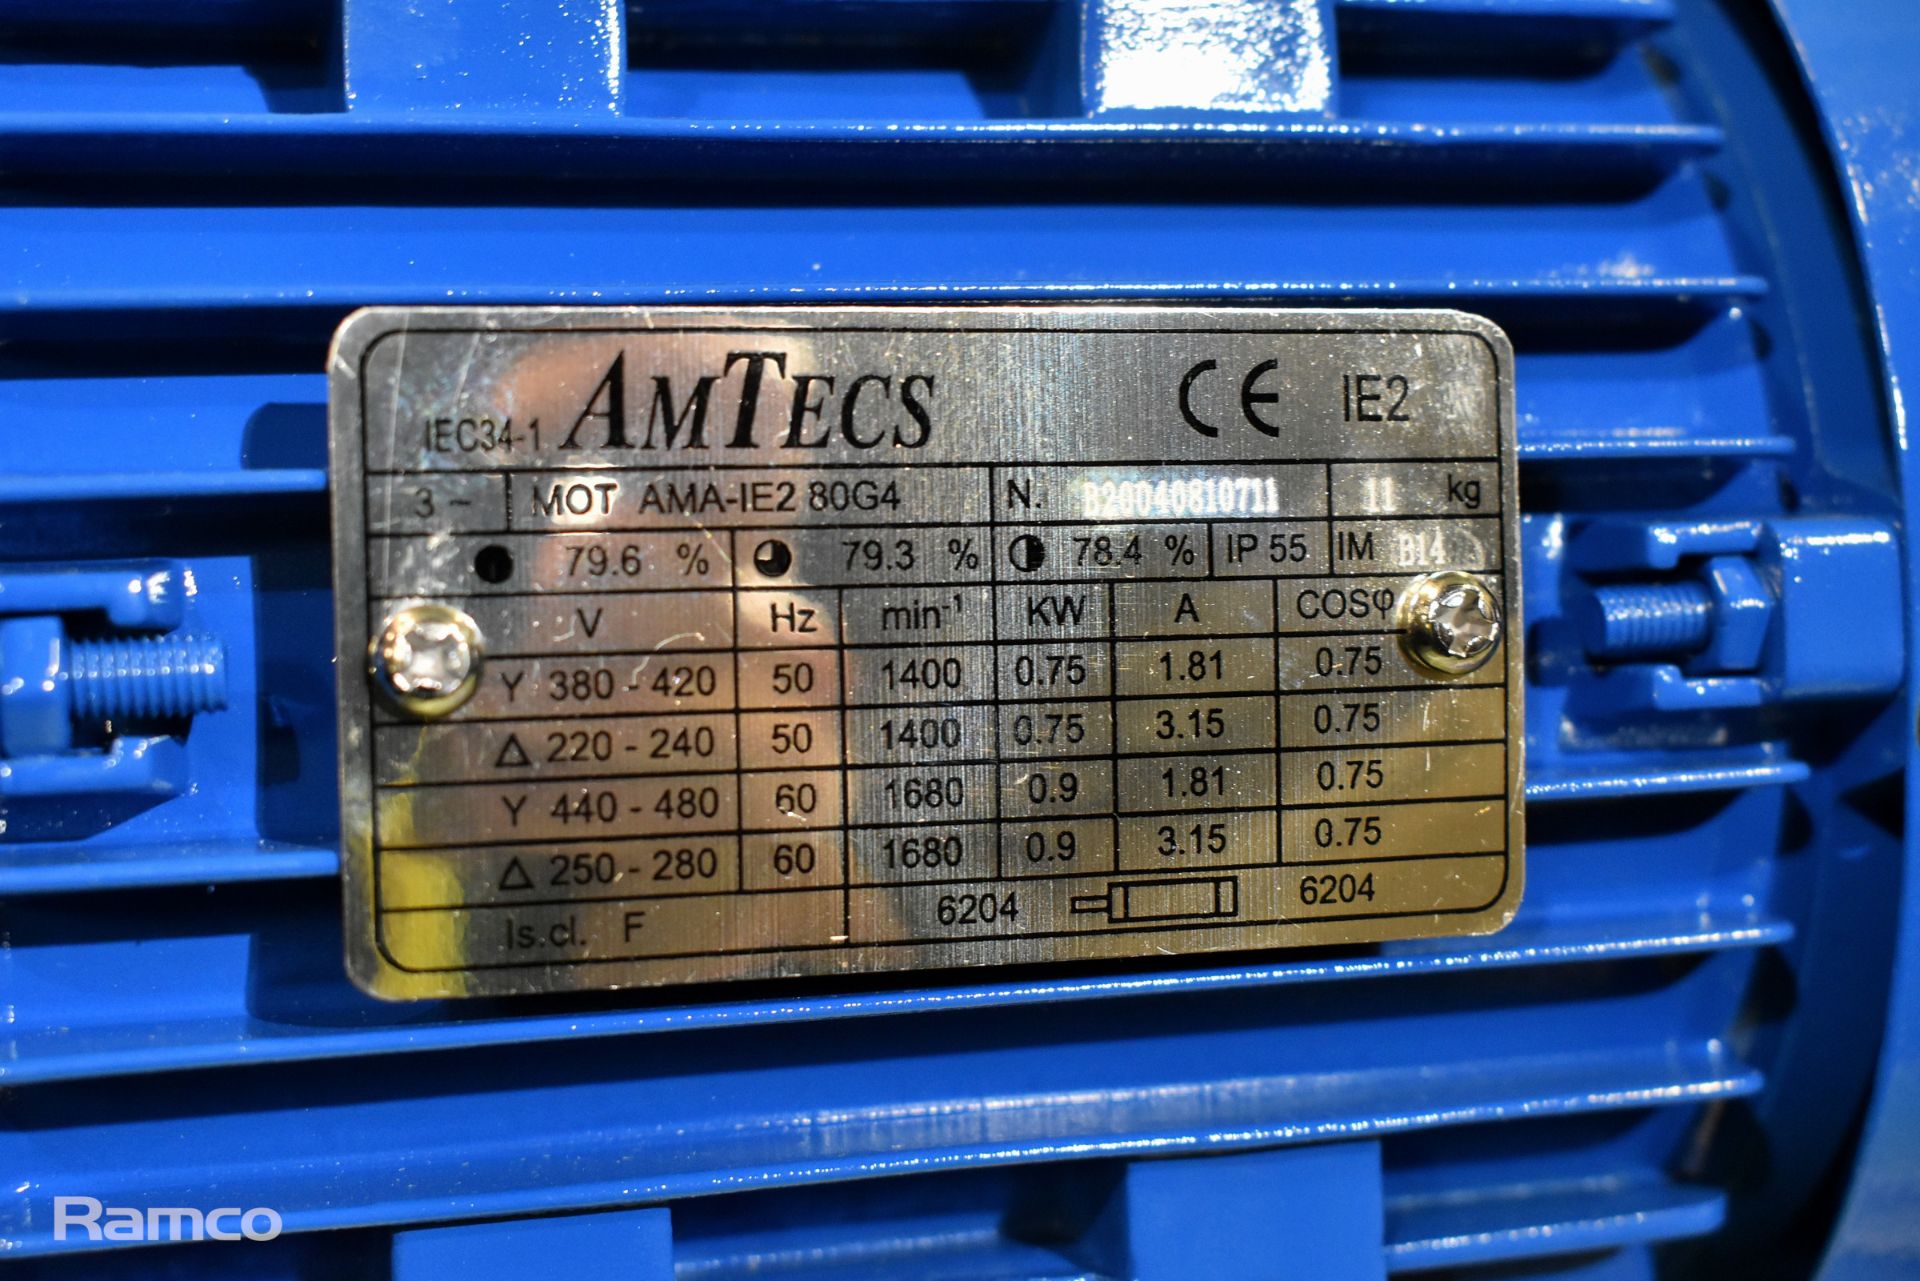 AmTecs IEC34-1 240V electric motor - Image 2 of 4